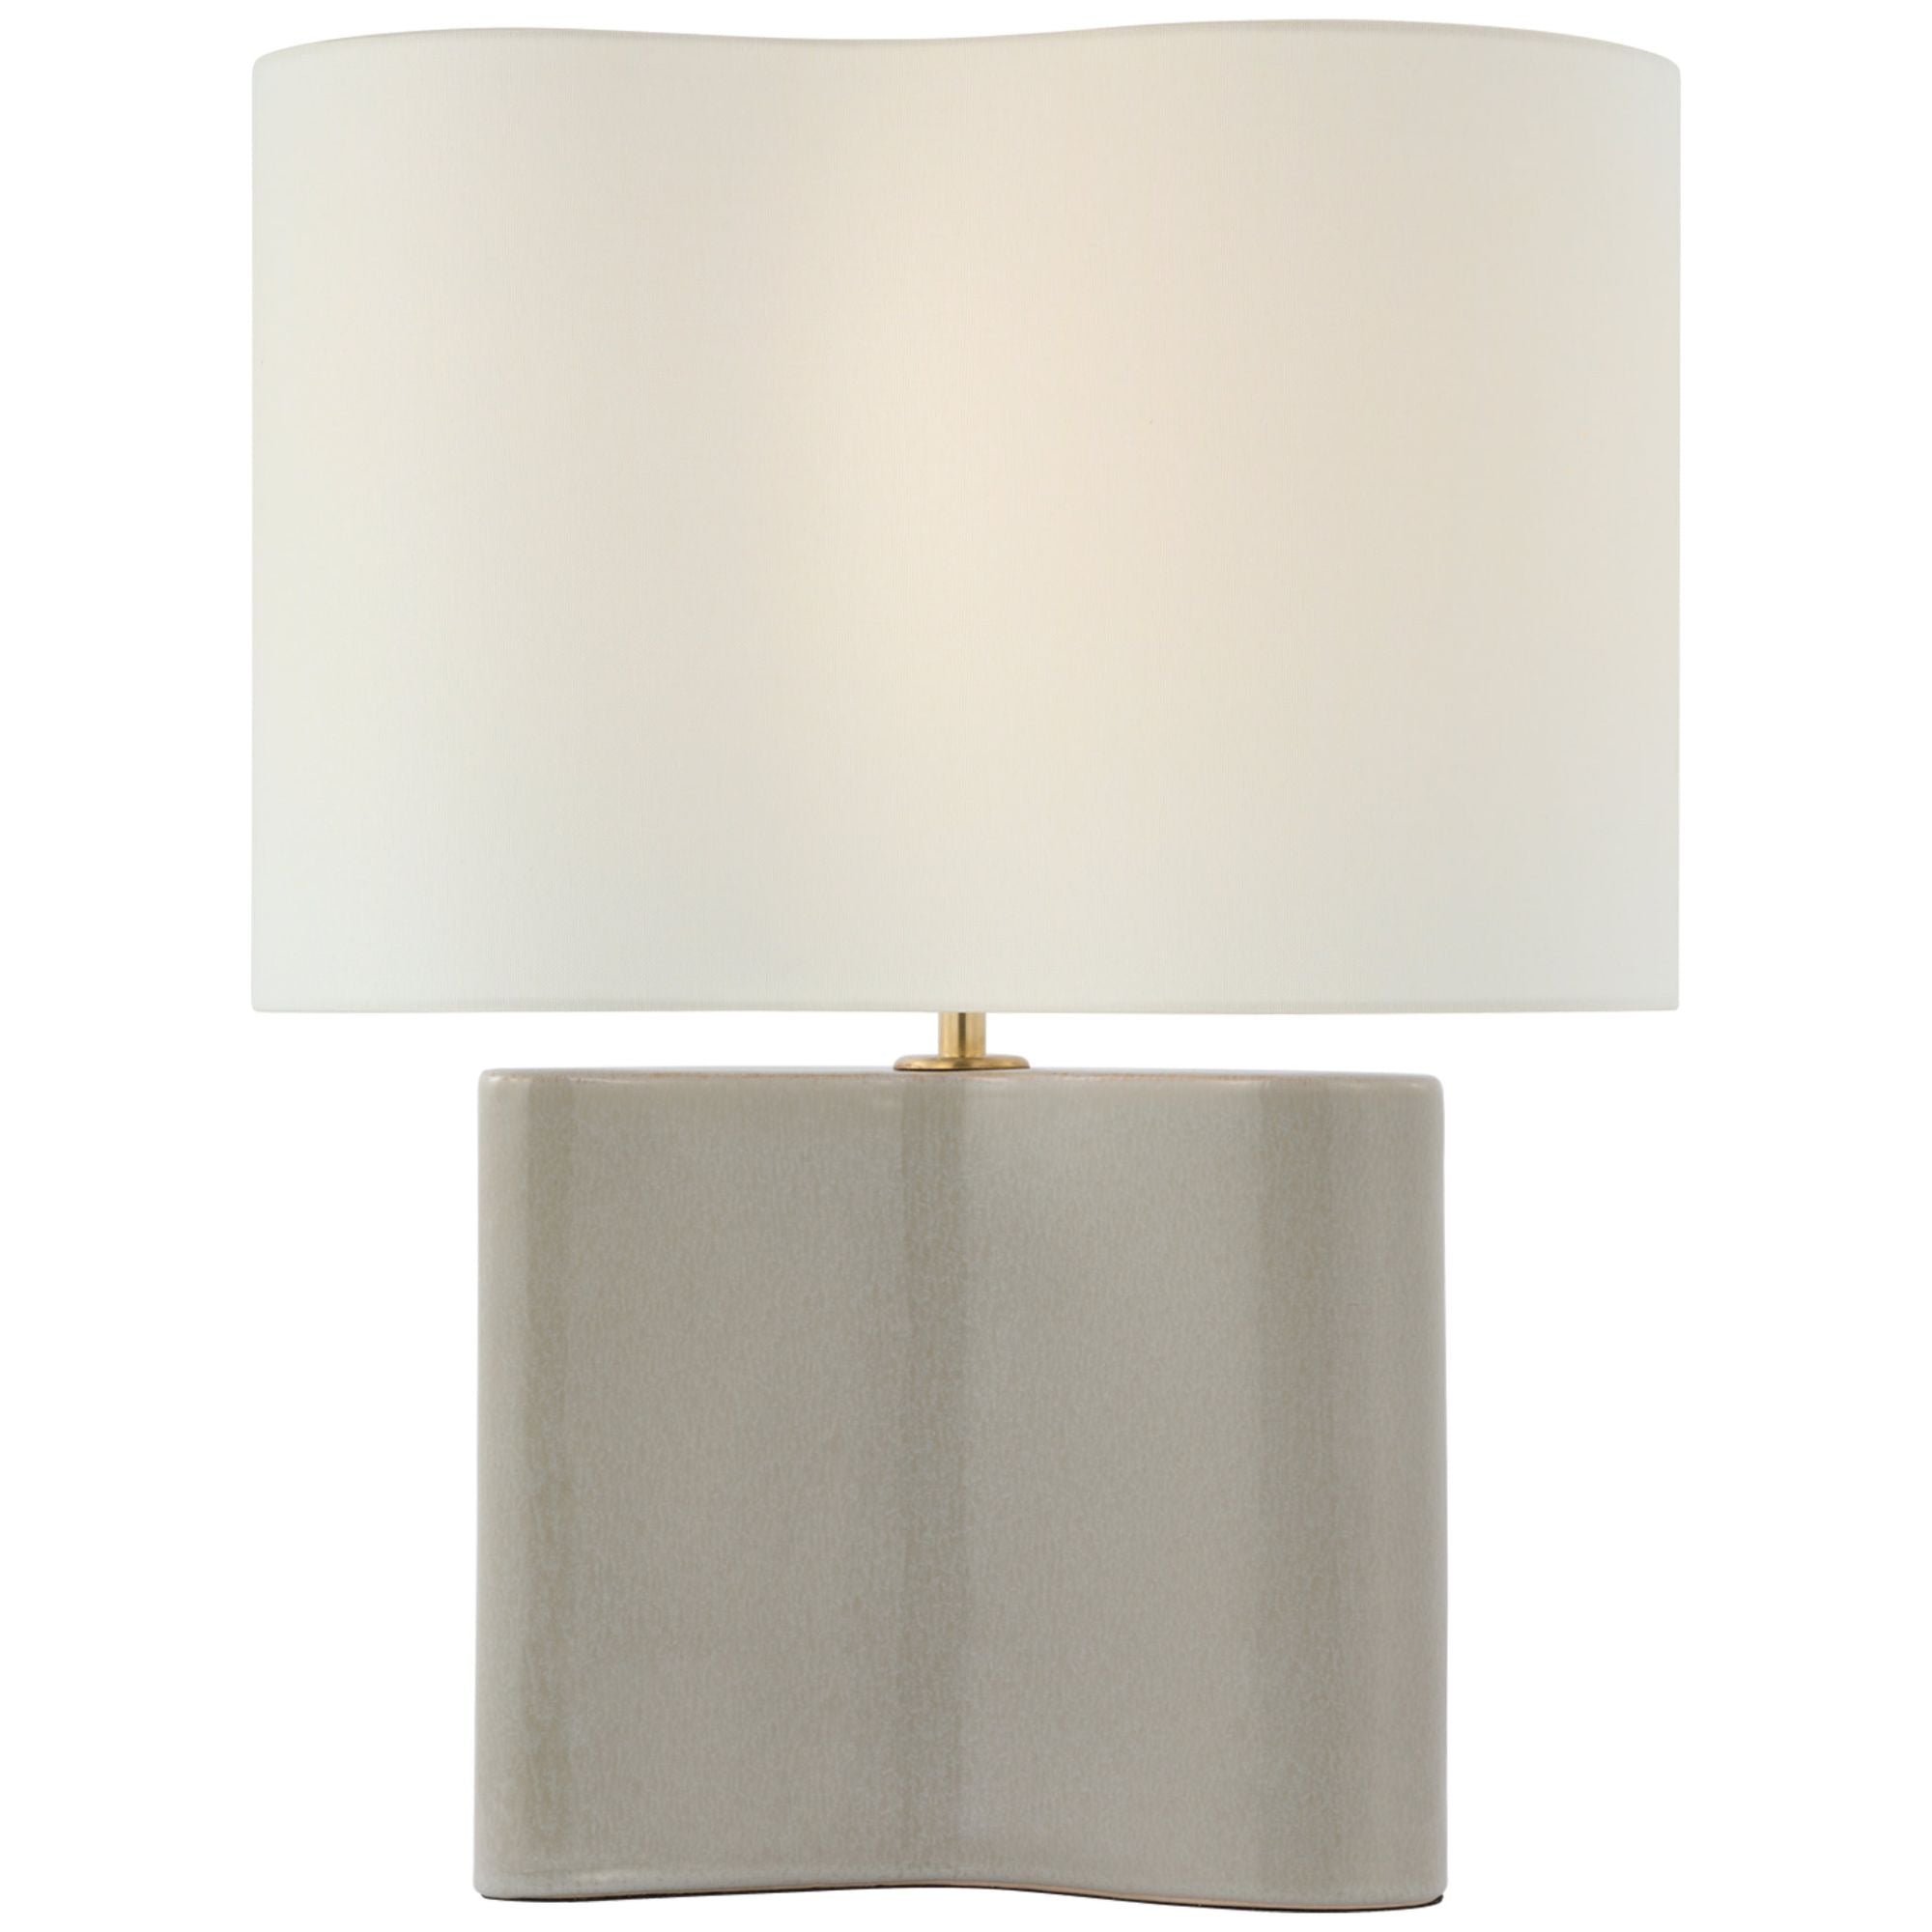 AERIN Mishca Medium Table Lamp in Shellish Gray with Linen Shade